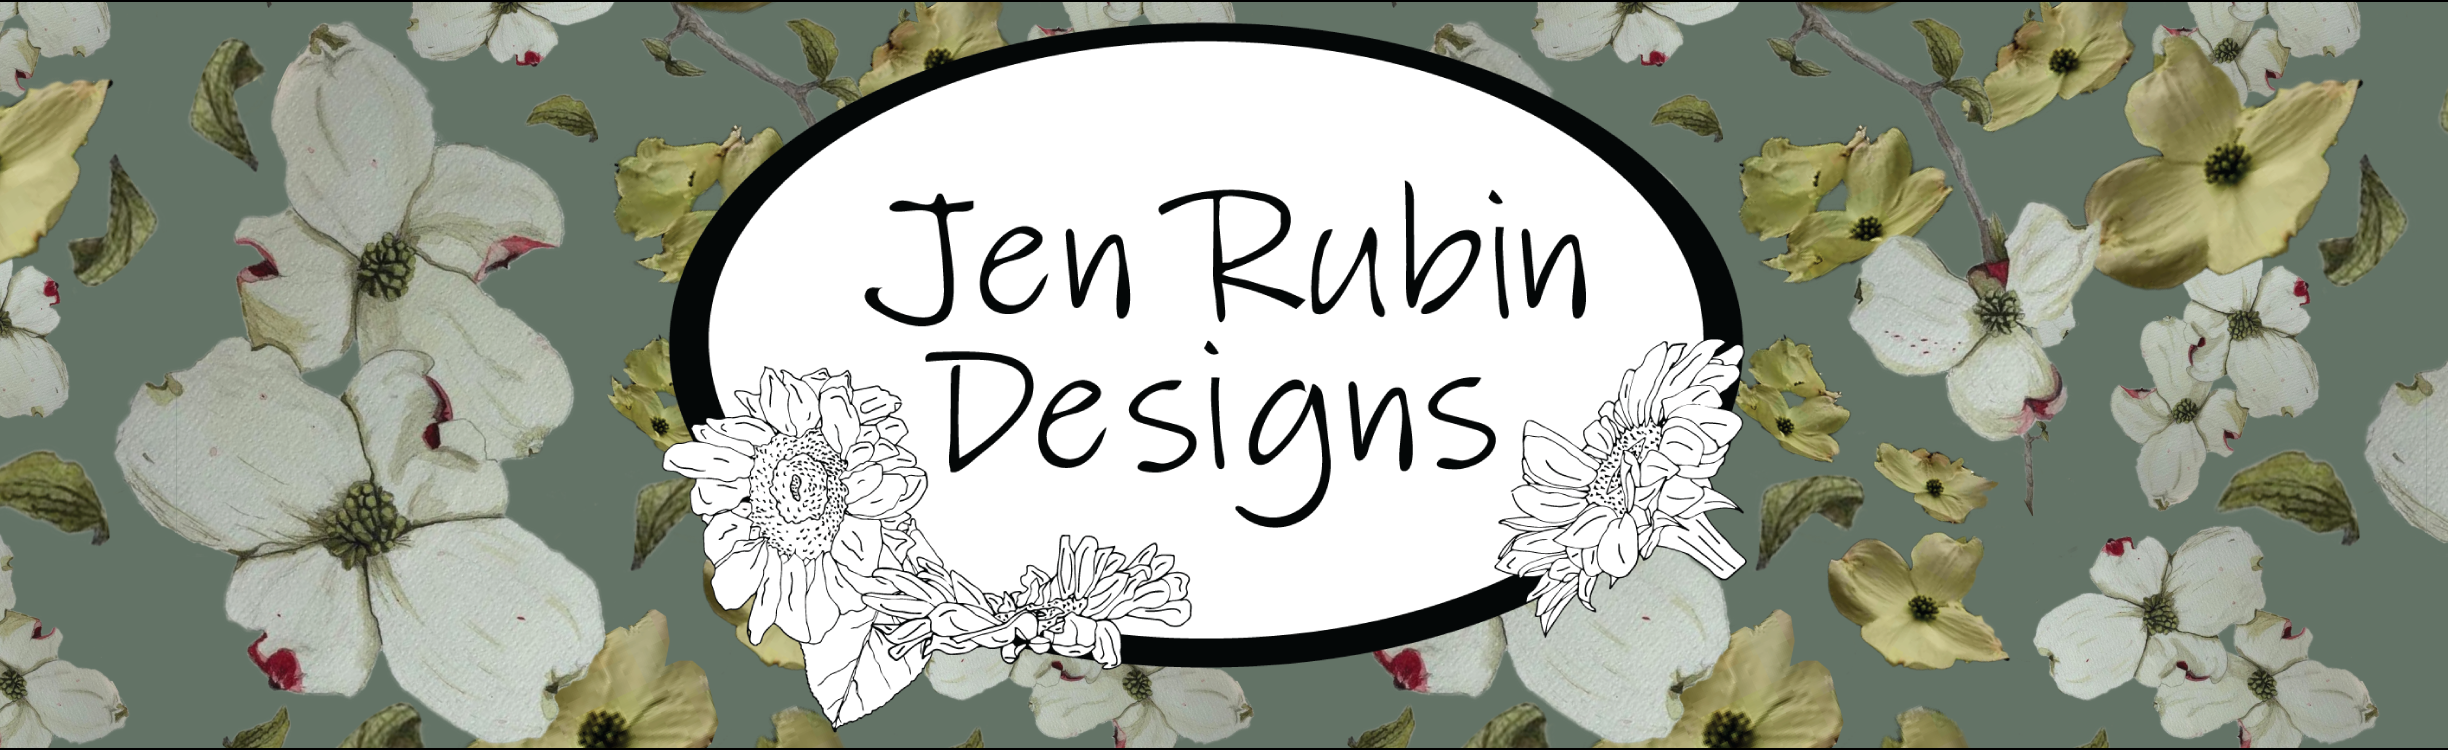 Jen Rubin Designs - Nature Surface Patterns